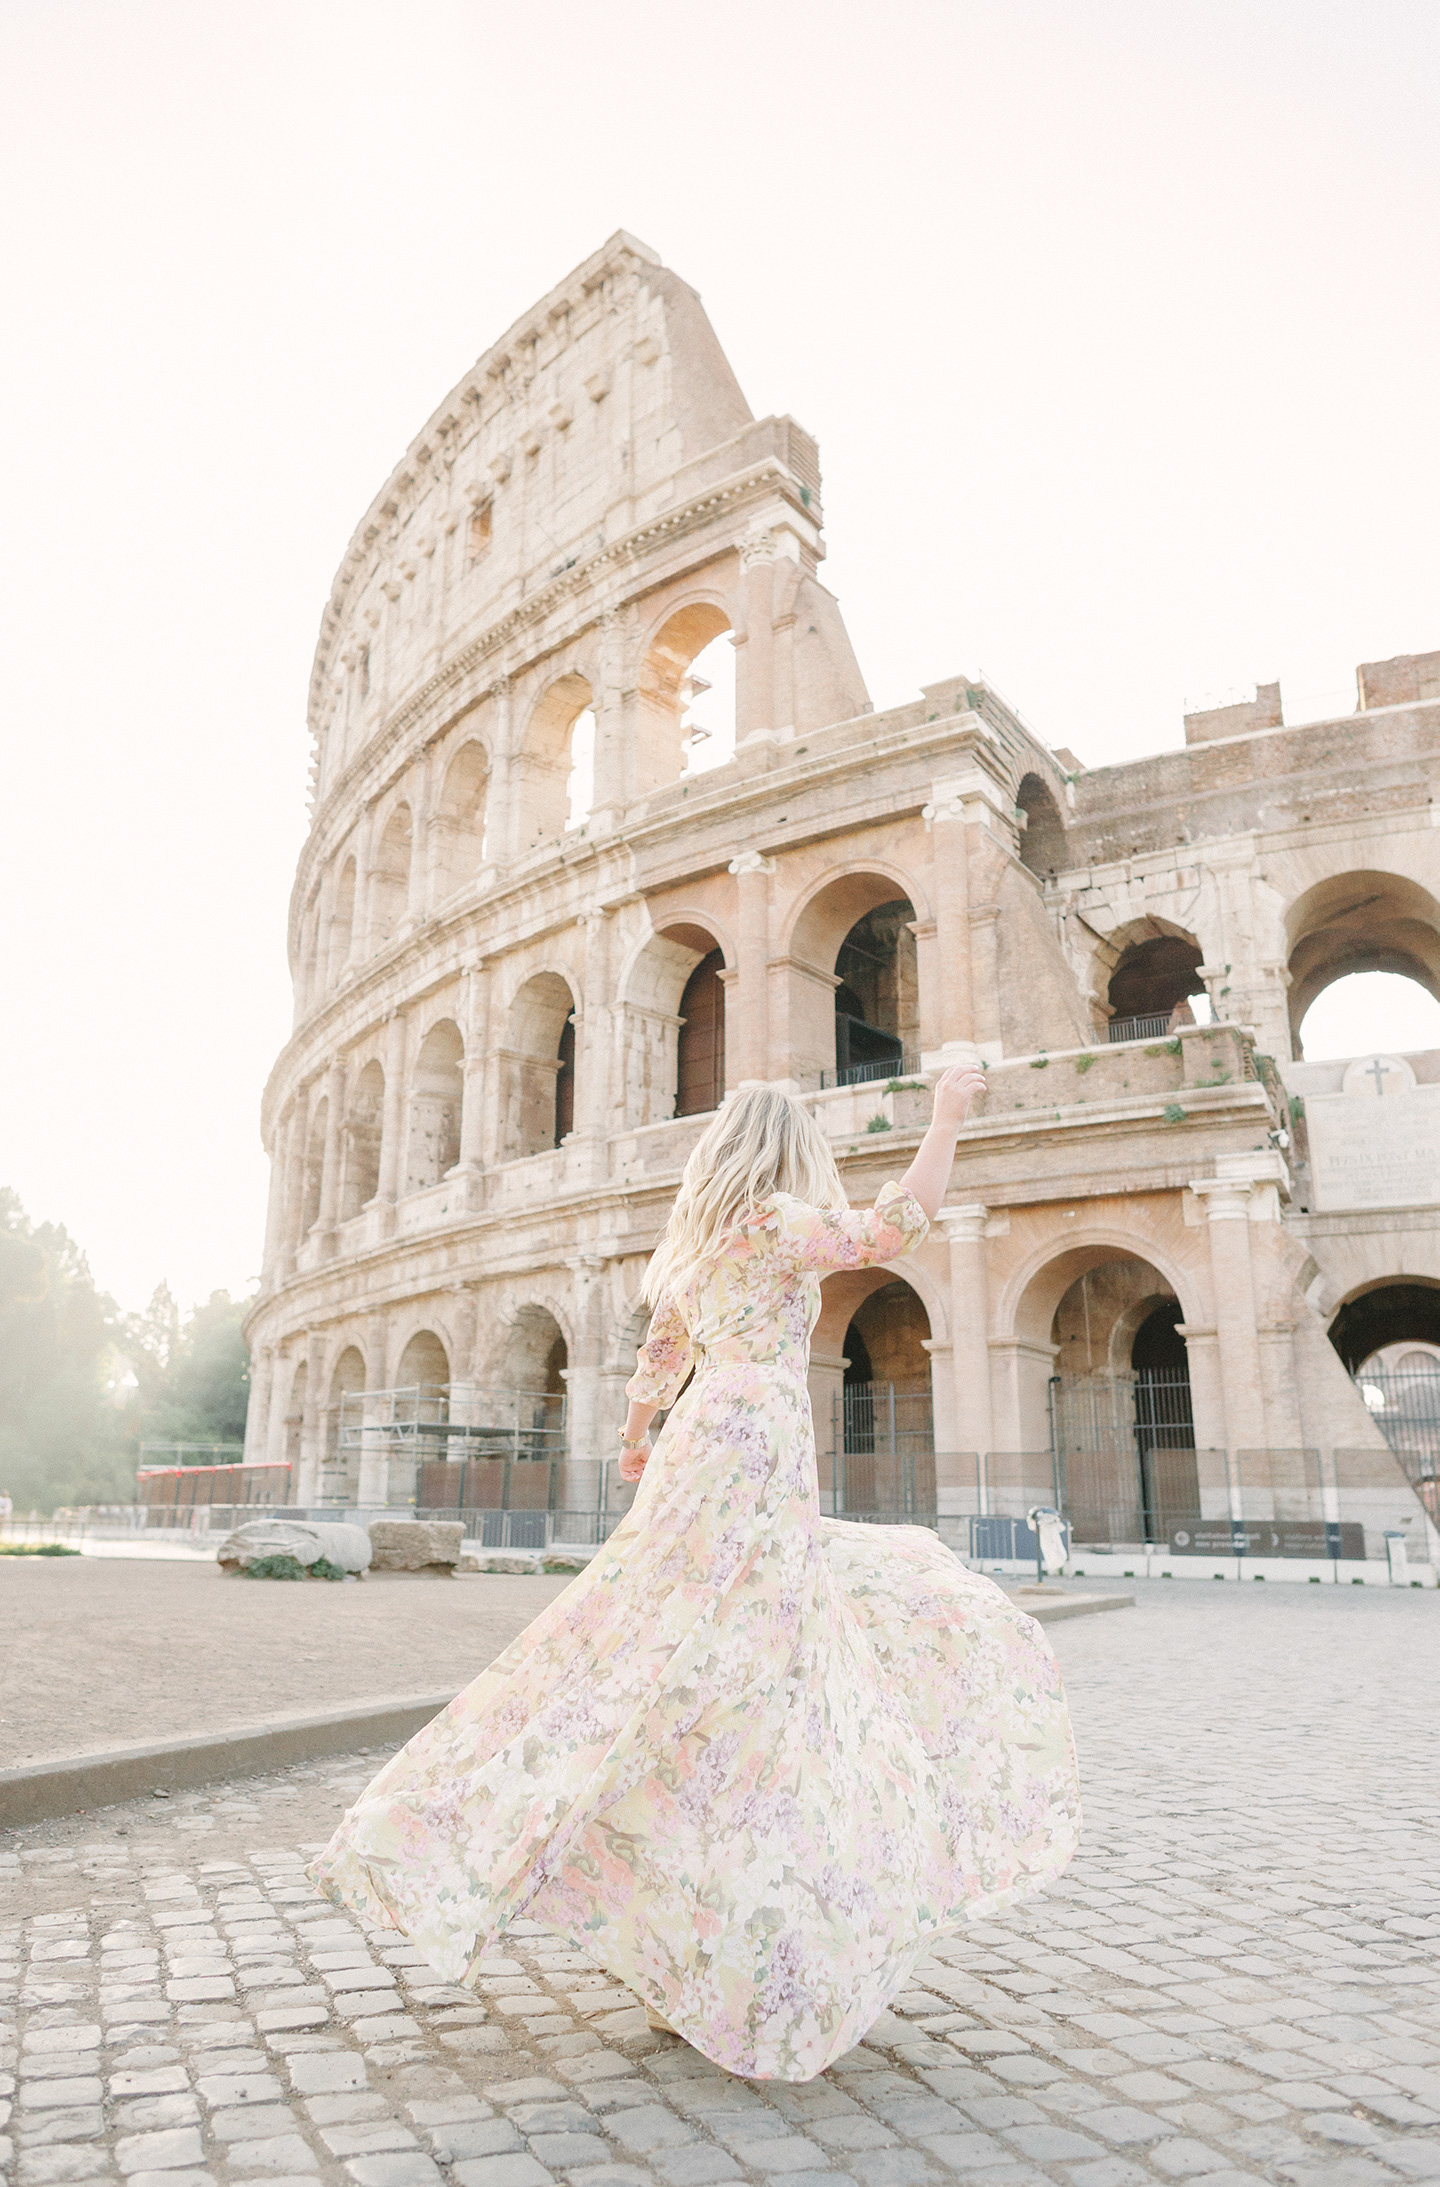 Yumi Kim at the Colosseum